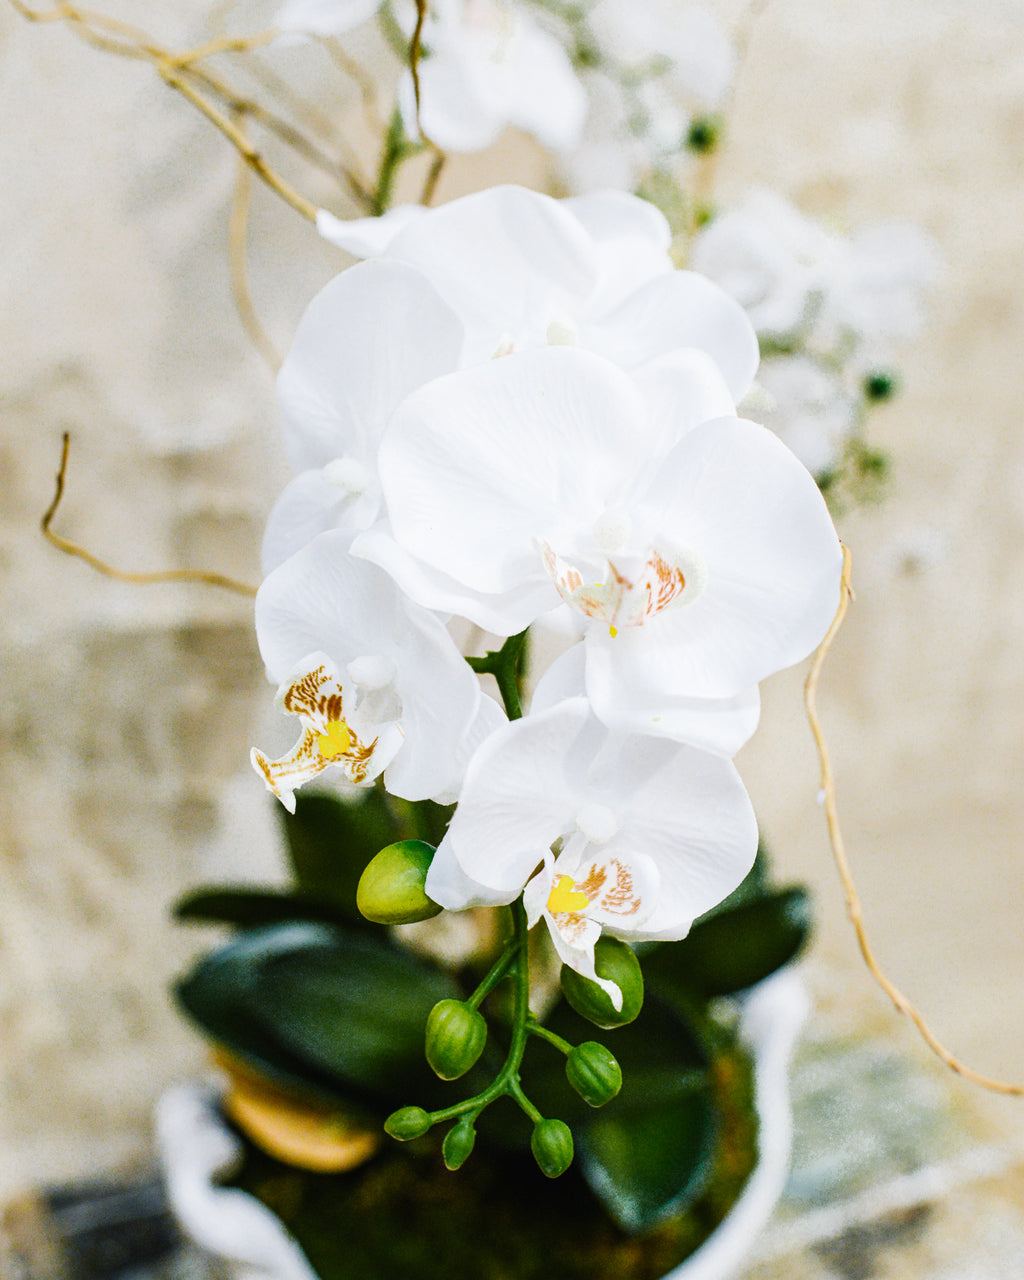 Triple White Phalaenopsis Orchid Drop In